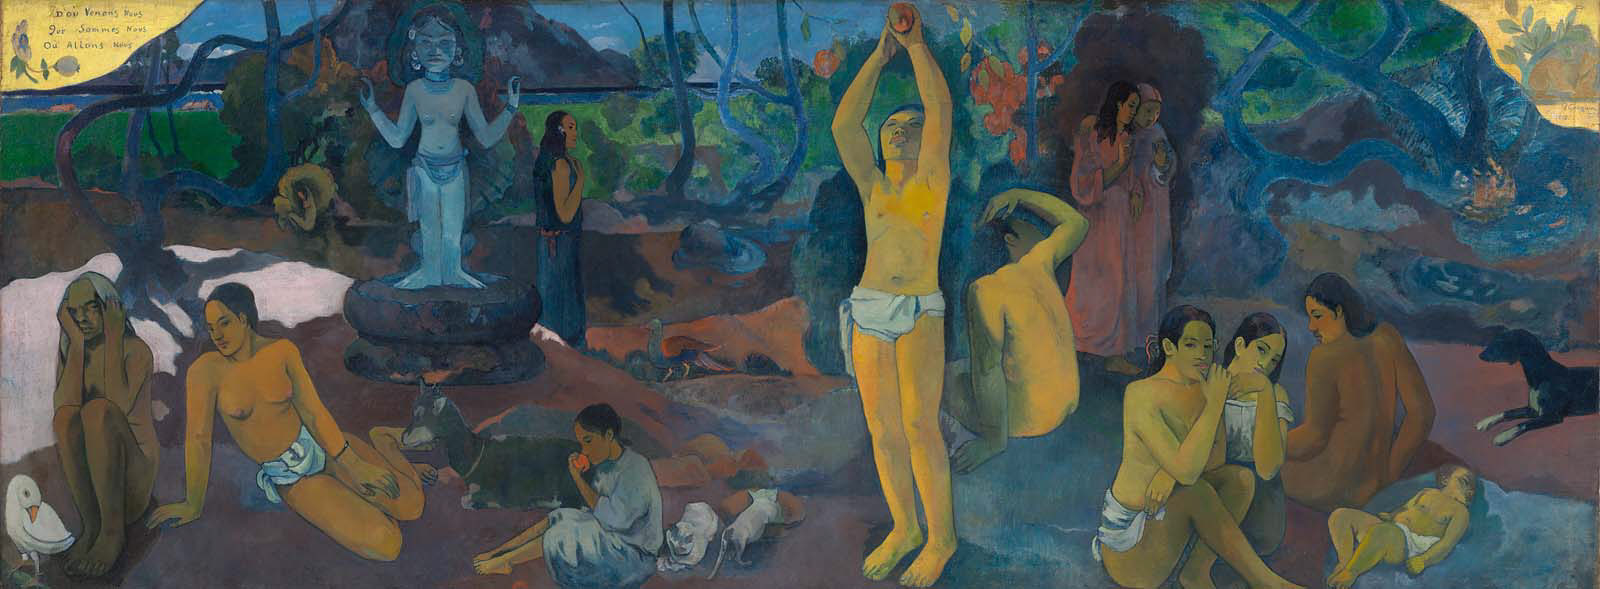 1. Paul Gauguin three questions